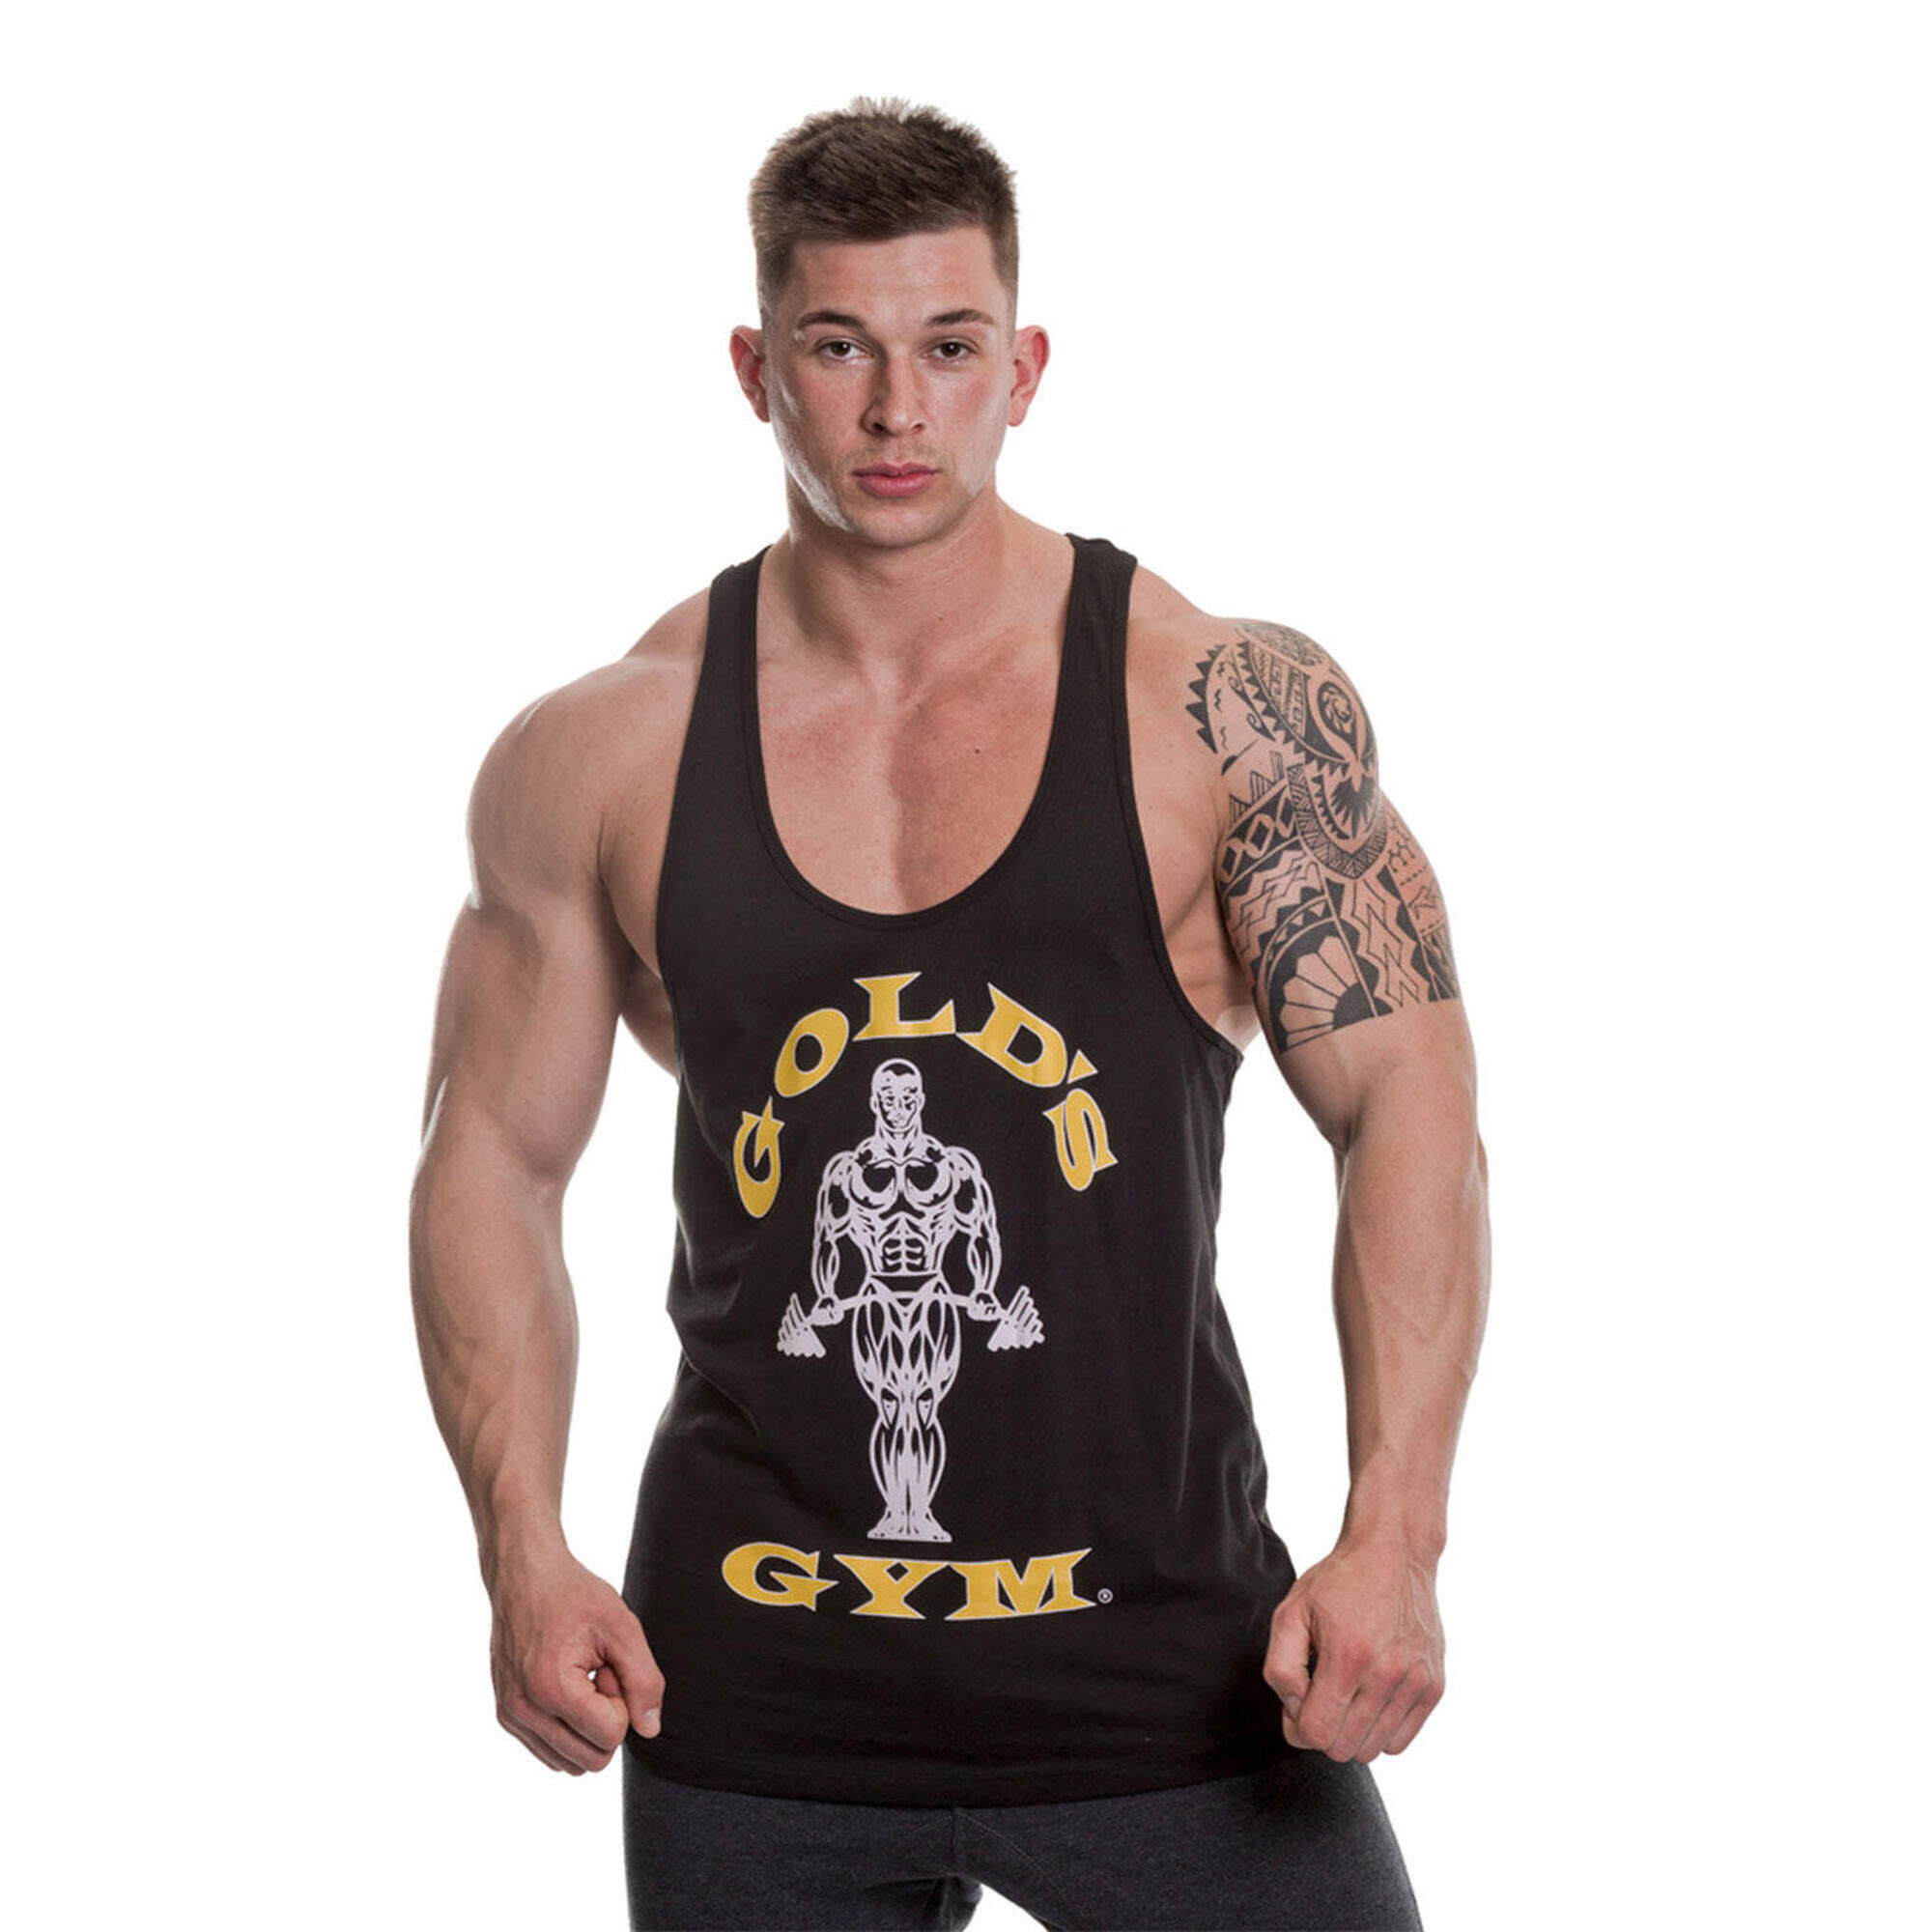 GOLD'S GYM Men's Gold's Gym Muscle Joe Print Premium Stringer Vest